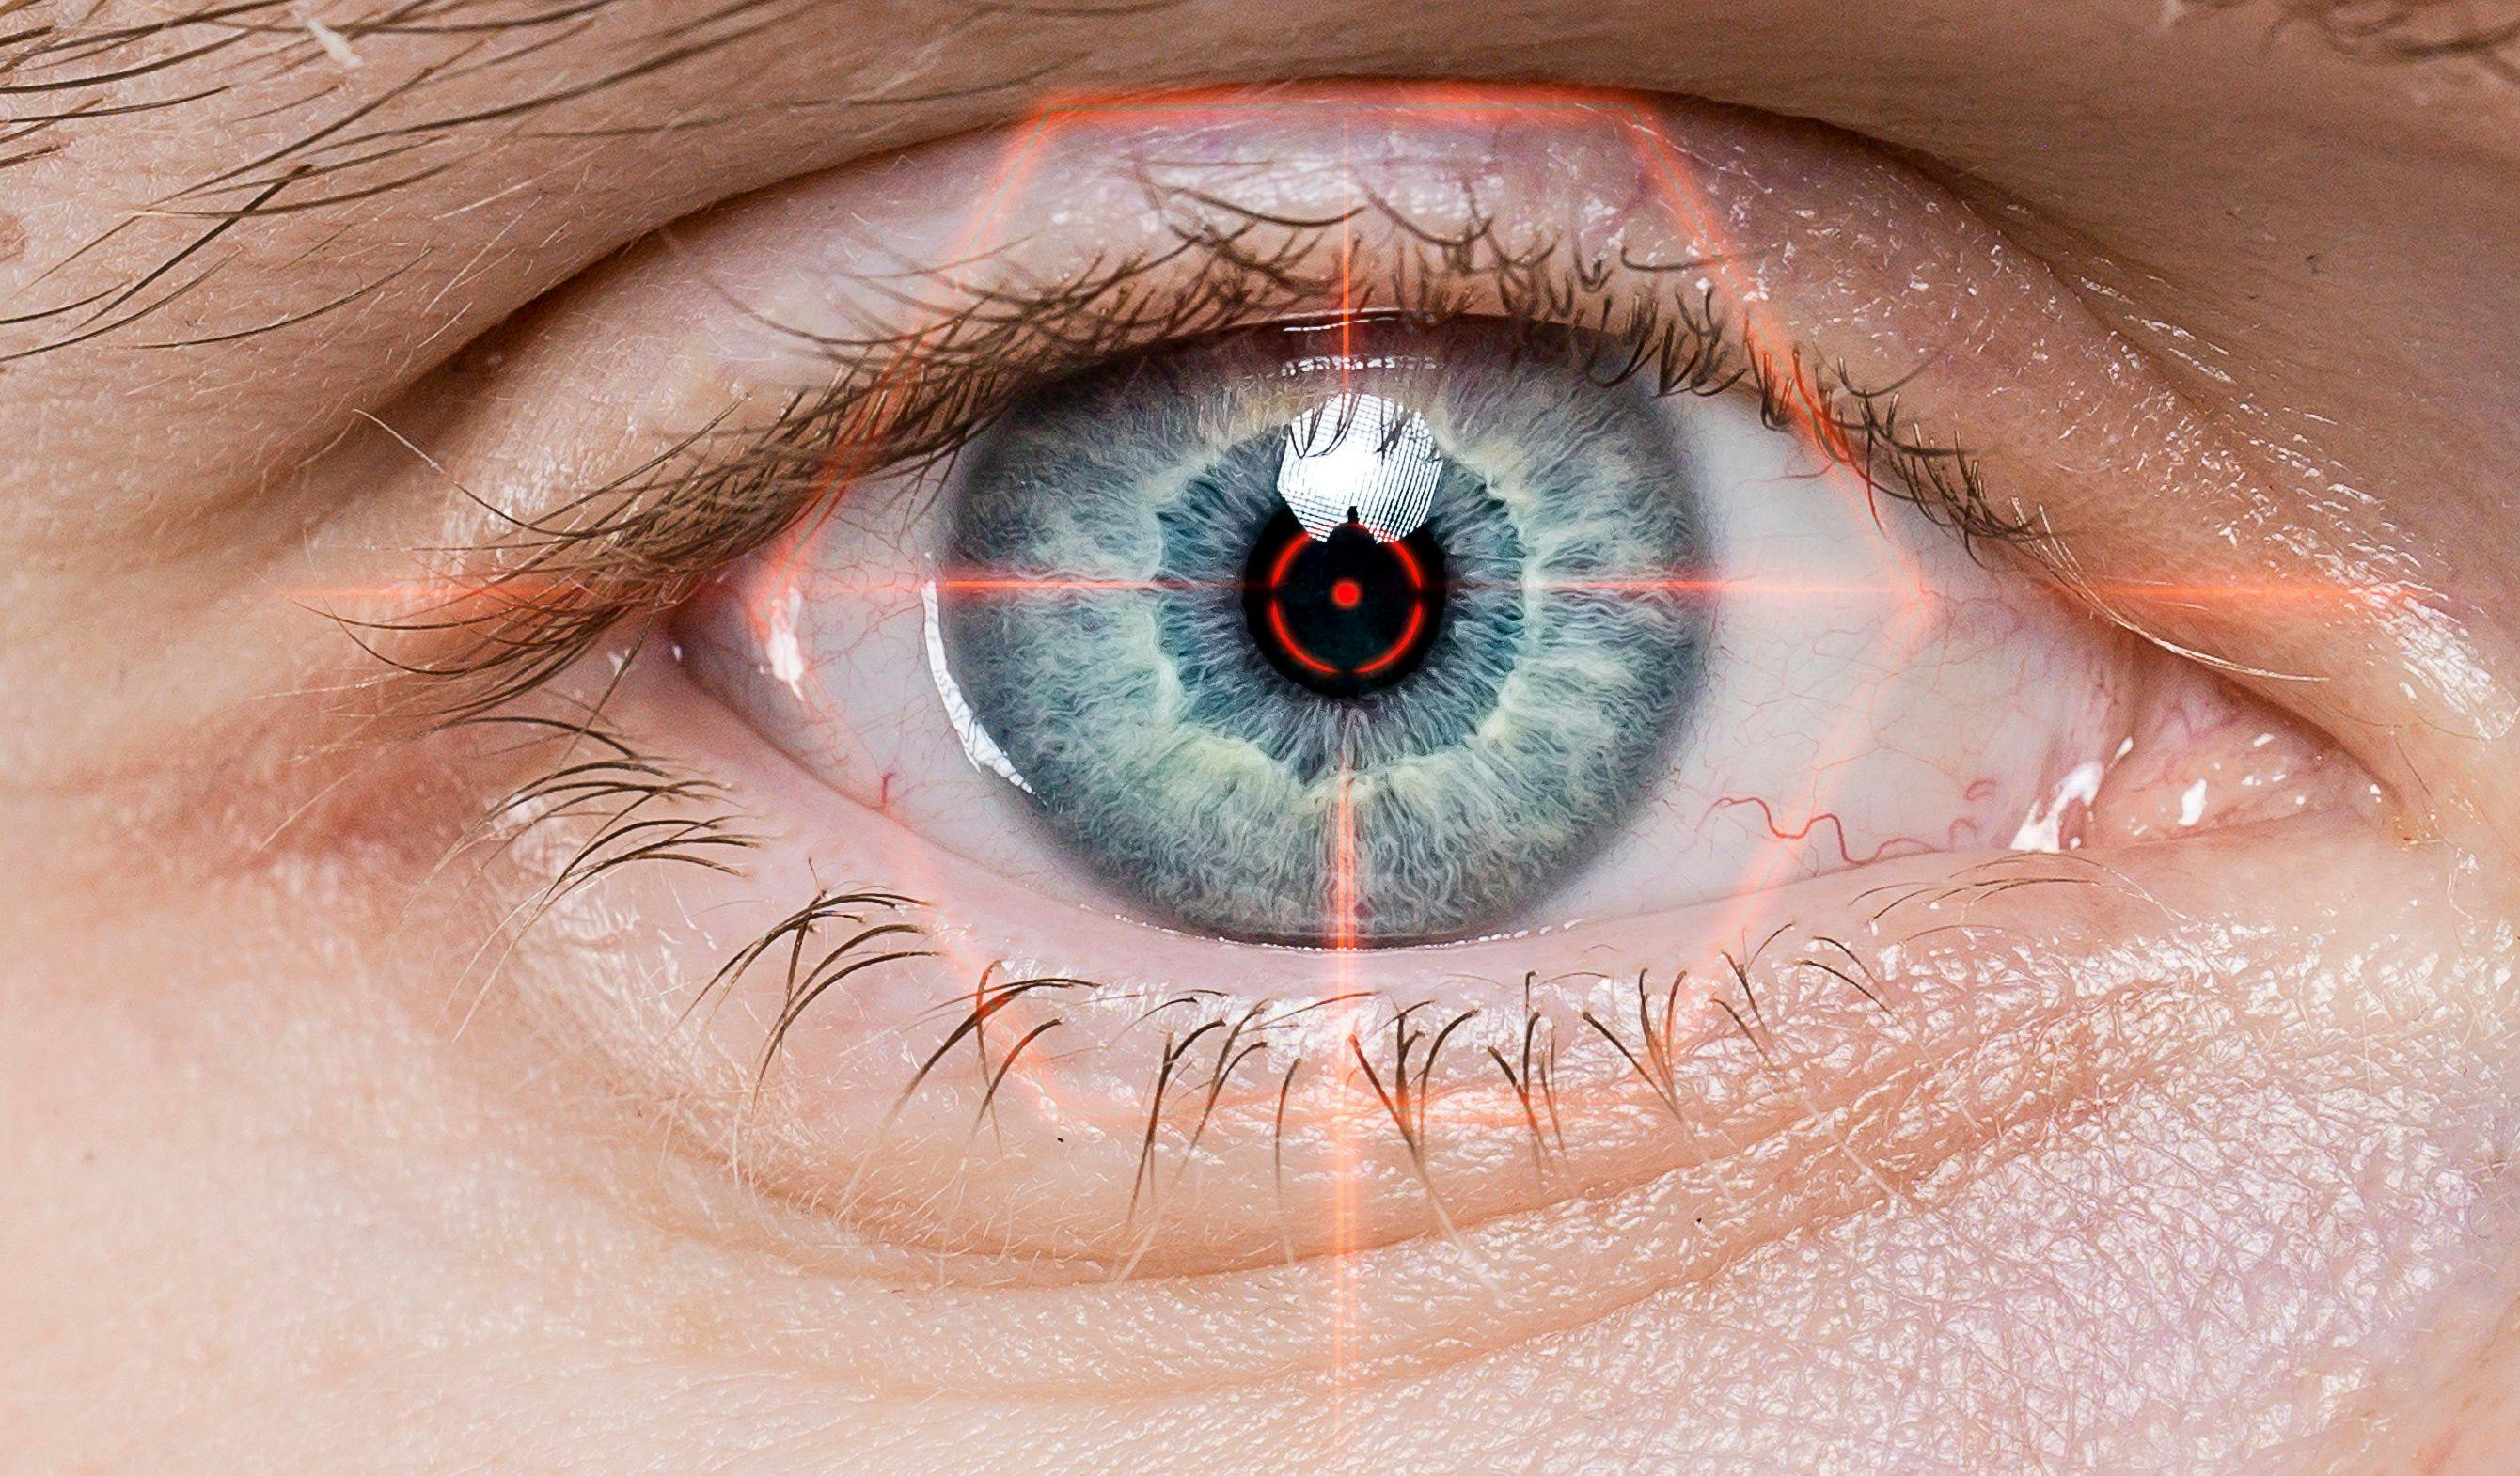 Eye scan | Image credit: oz - stock.adobe.com